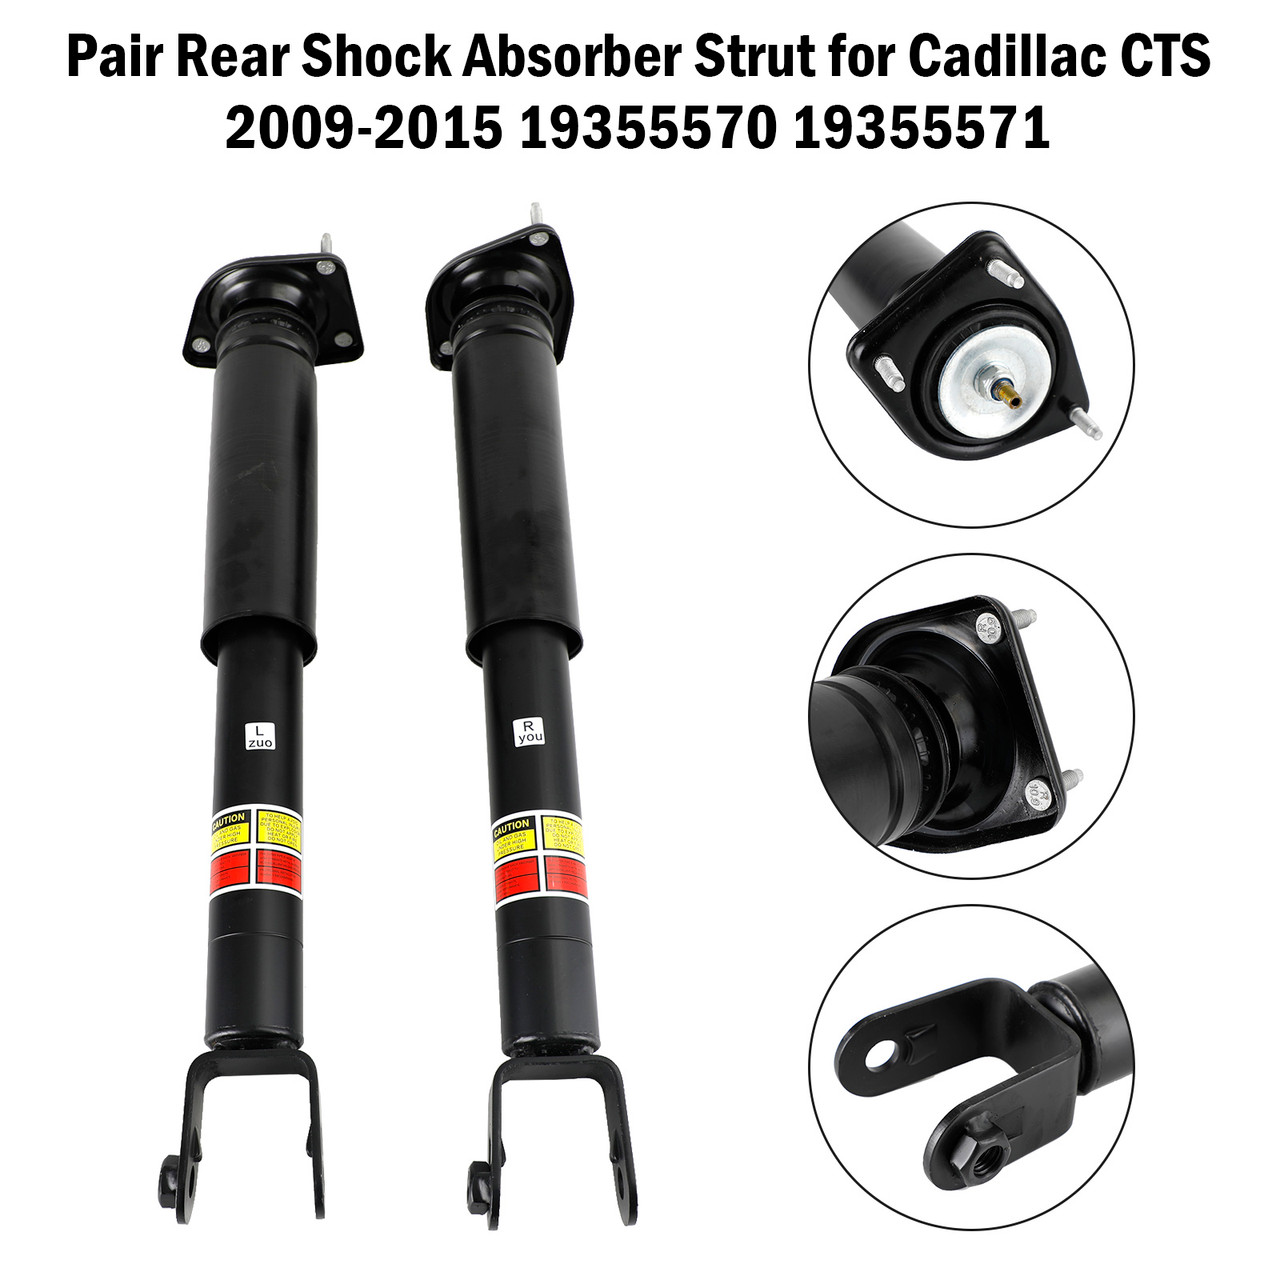 2009-2015 Cadillac CTS Pair Rear Shock Absorber Strut 19355570 19355571